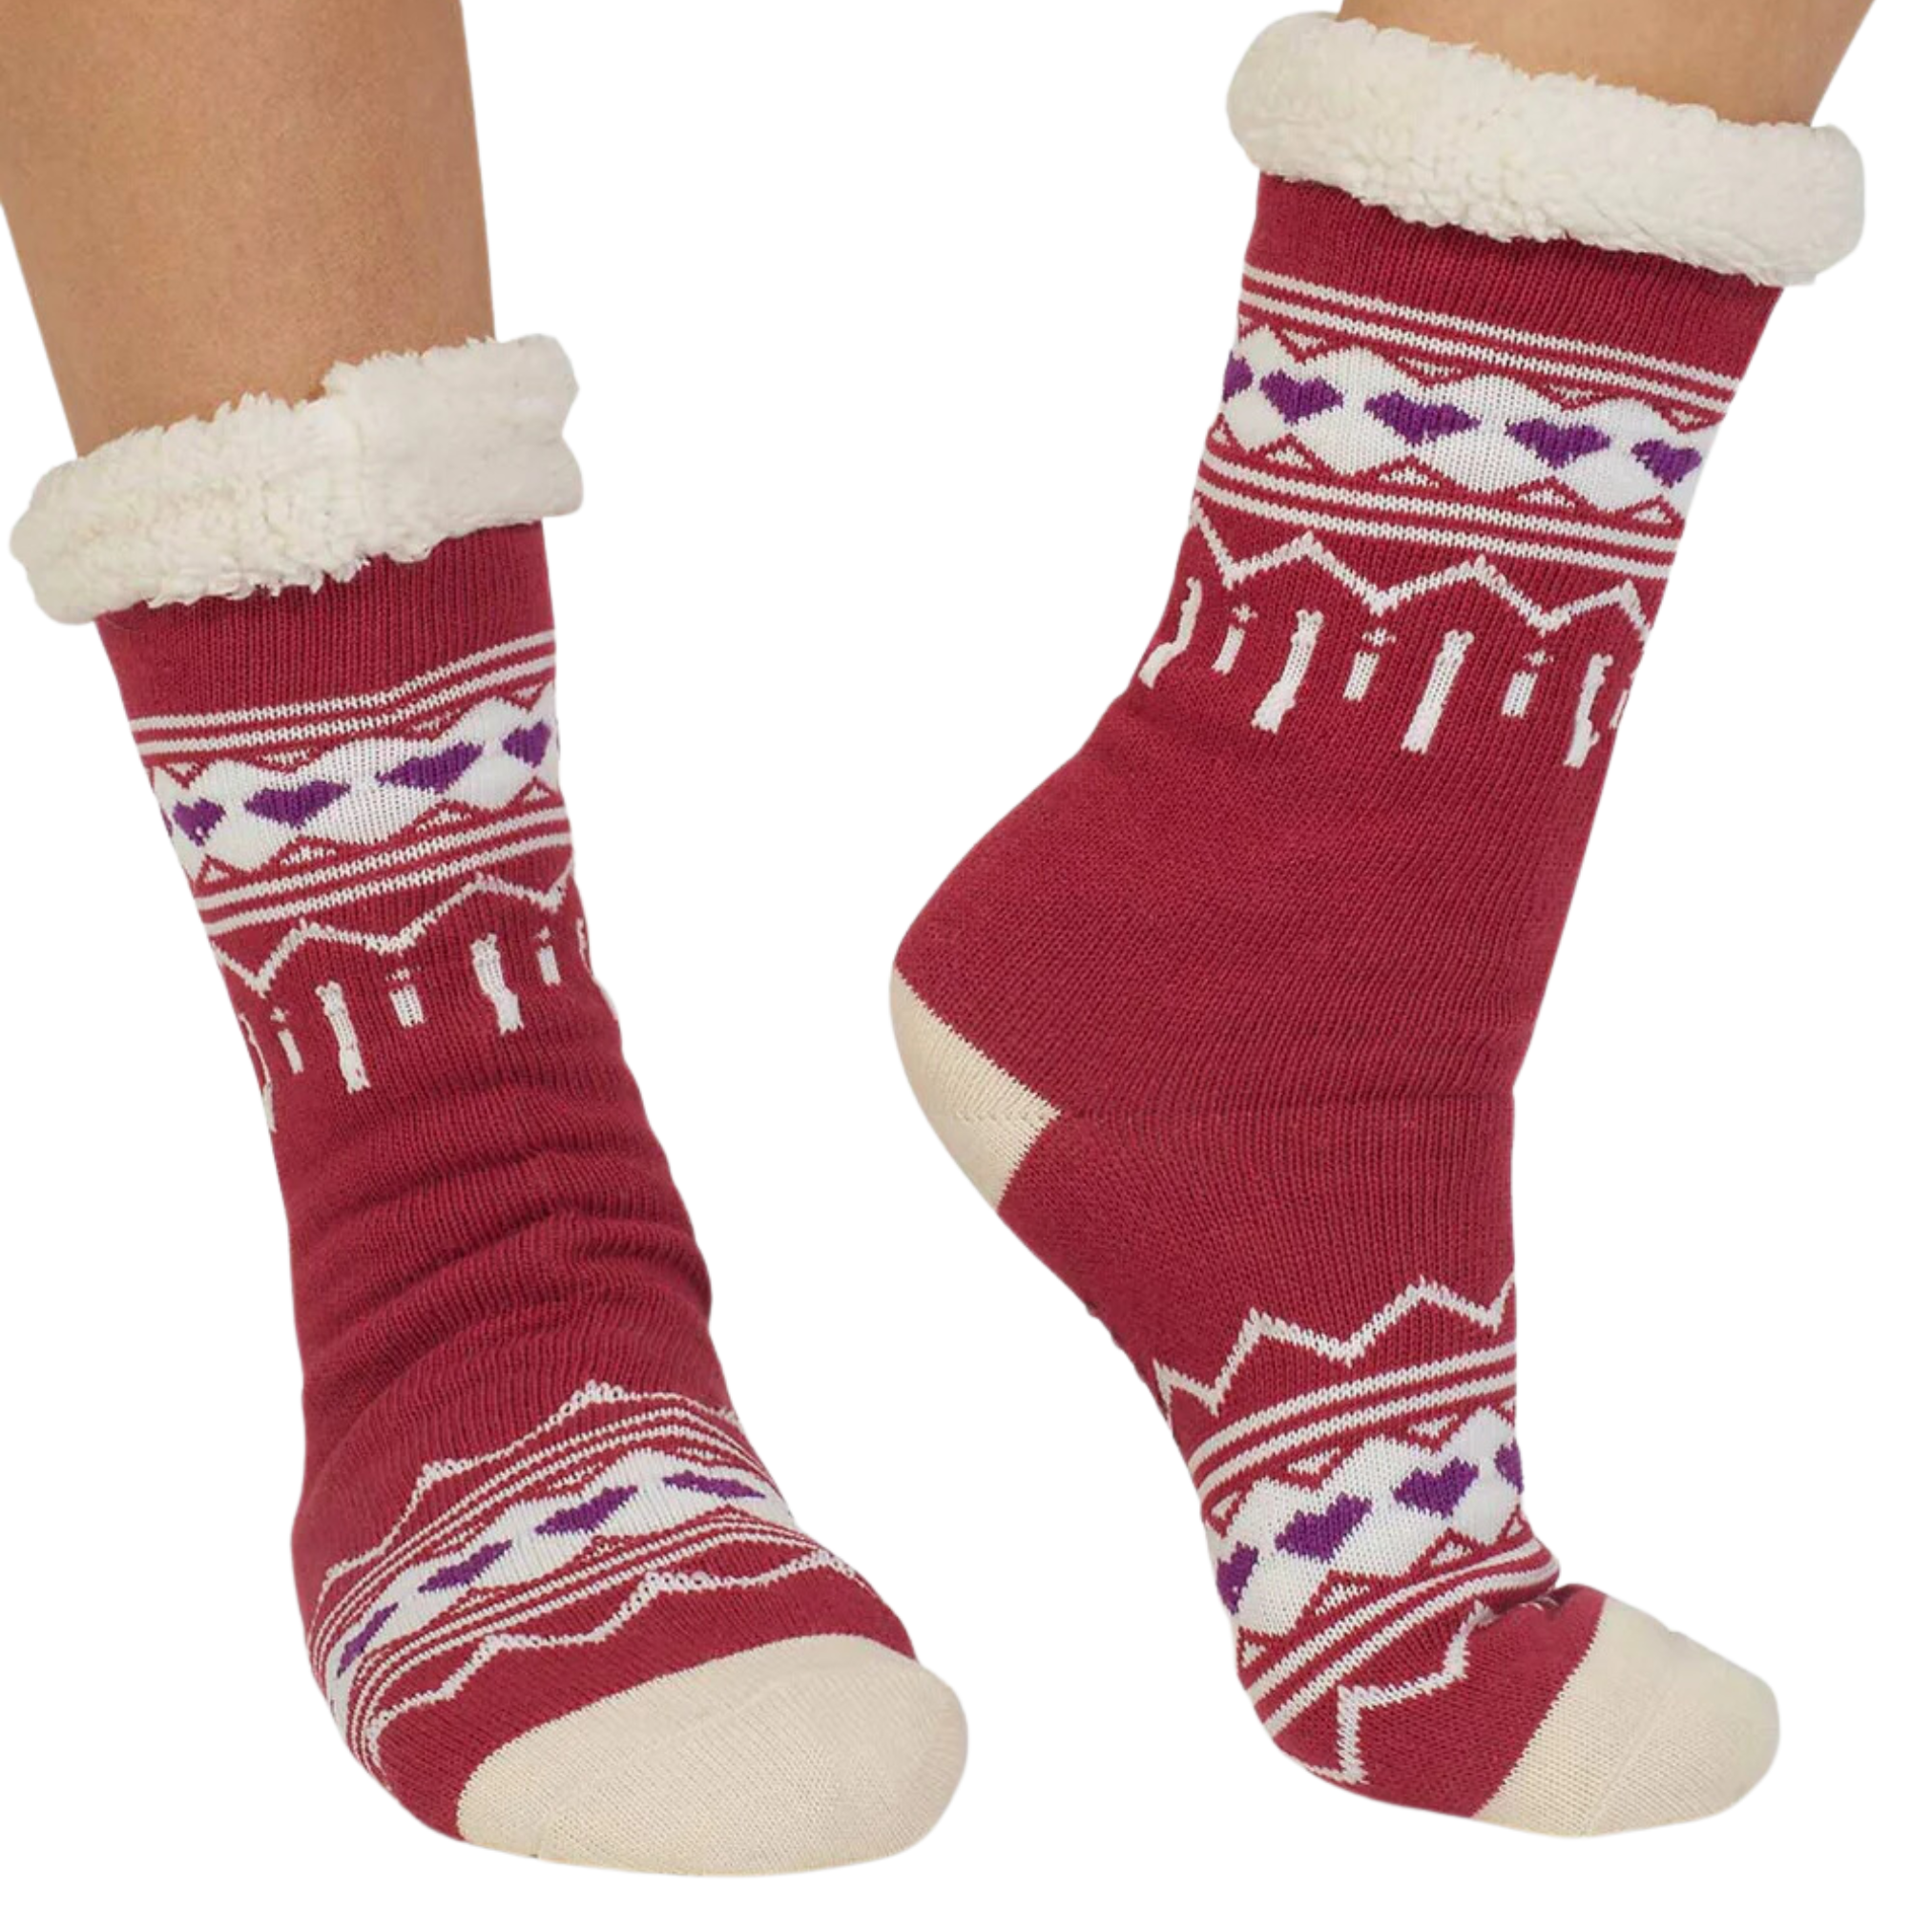 Ilah Fair Isle Slipper Socks (Women's)